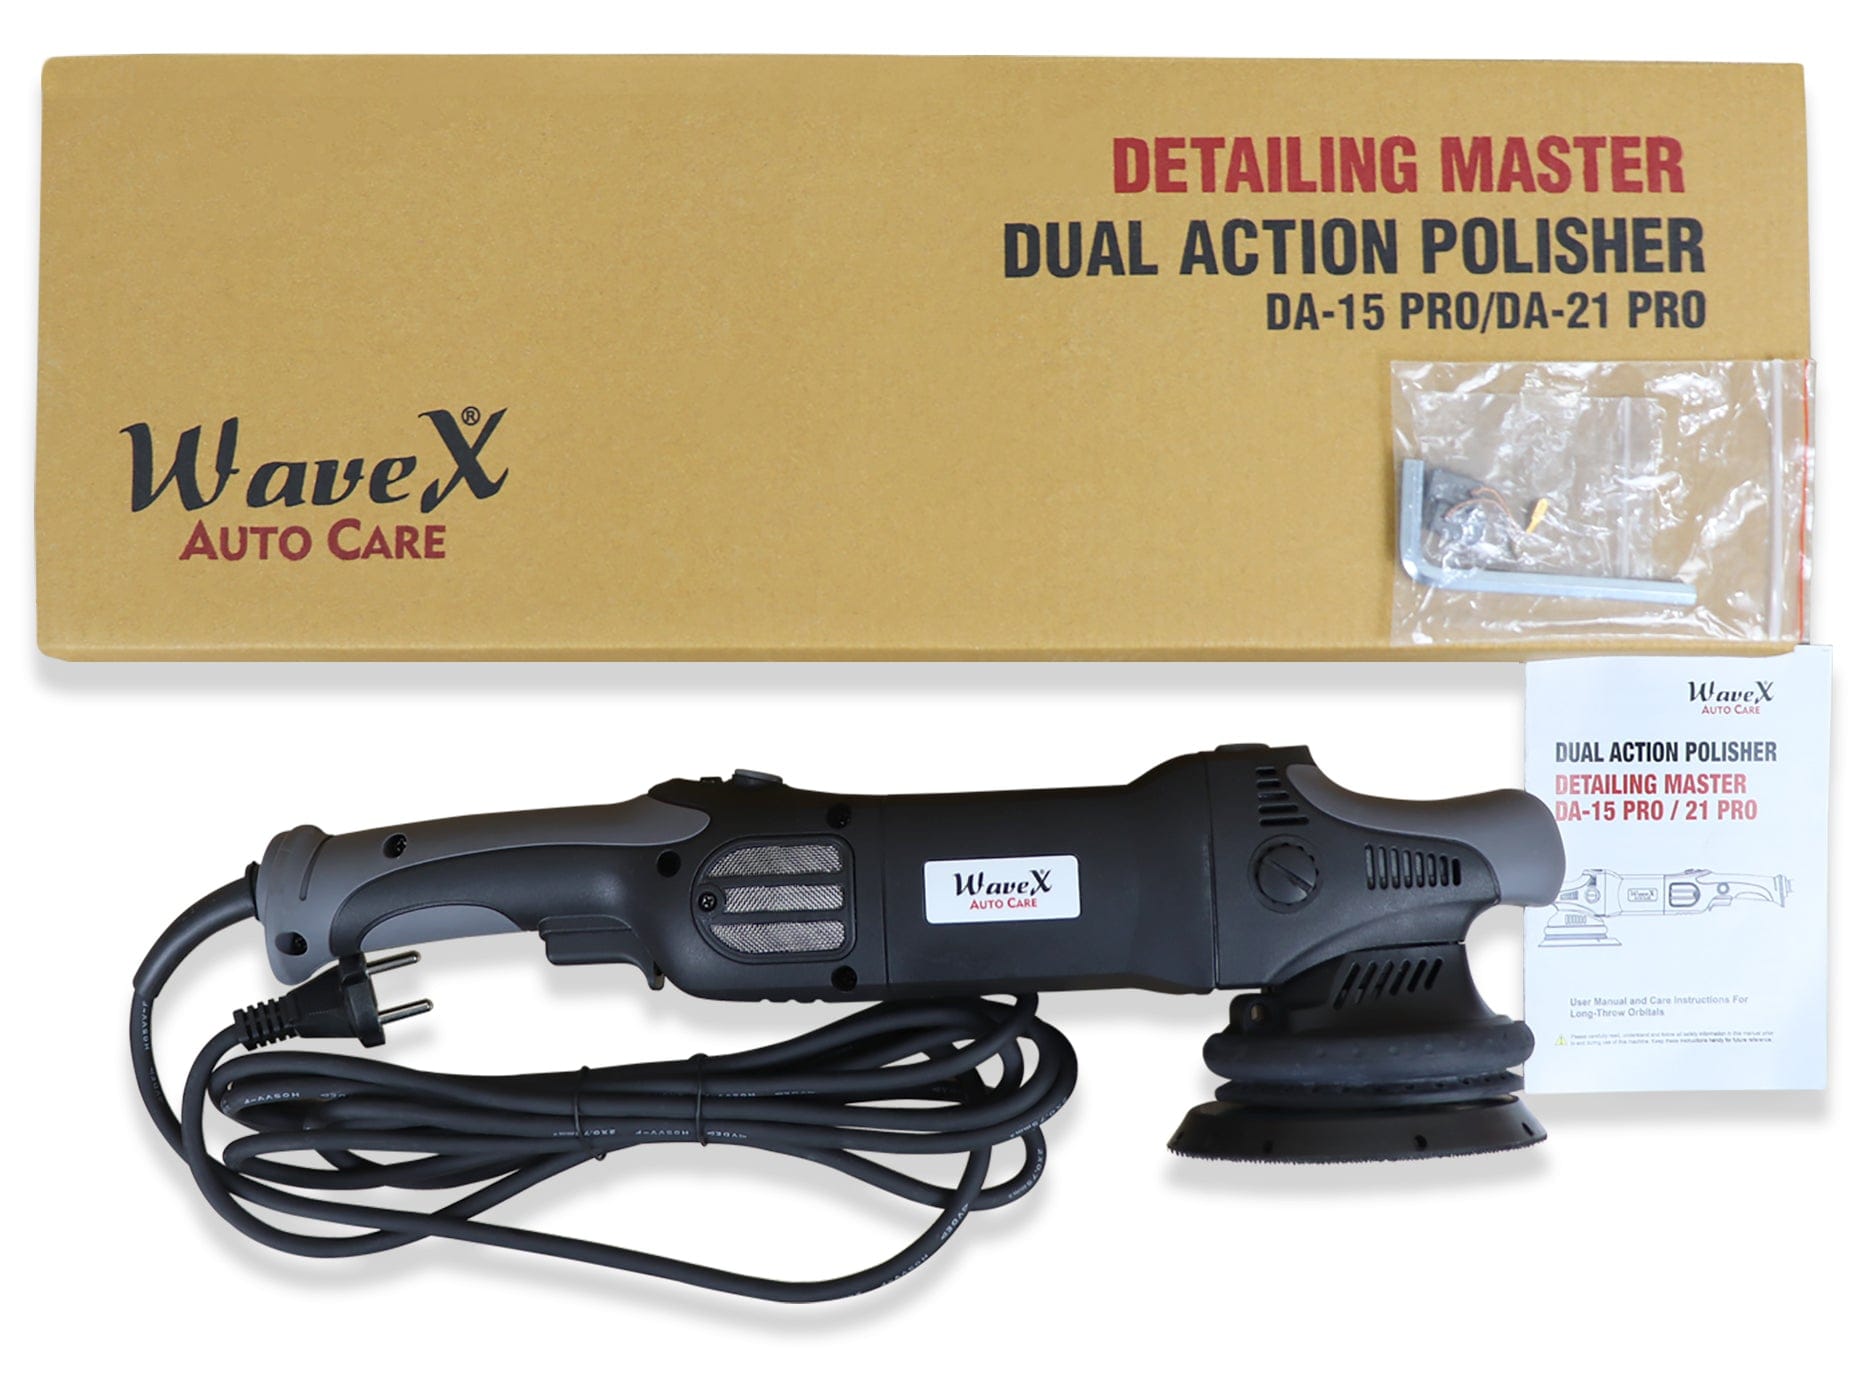 Wavex Detailing Master, Dual Action Polisher Machine for Car Detailing